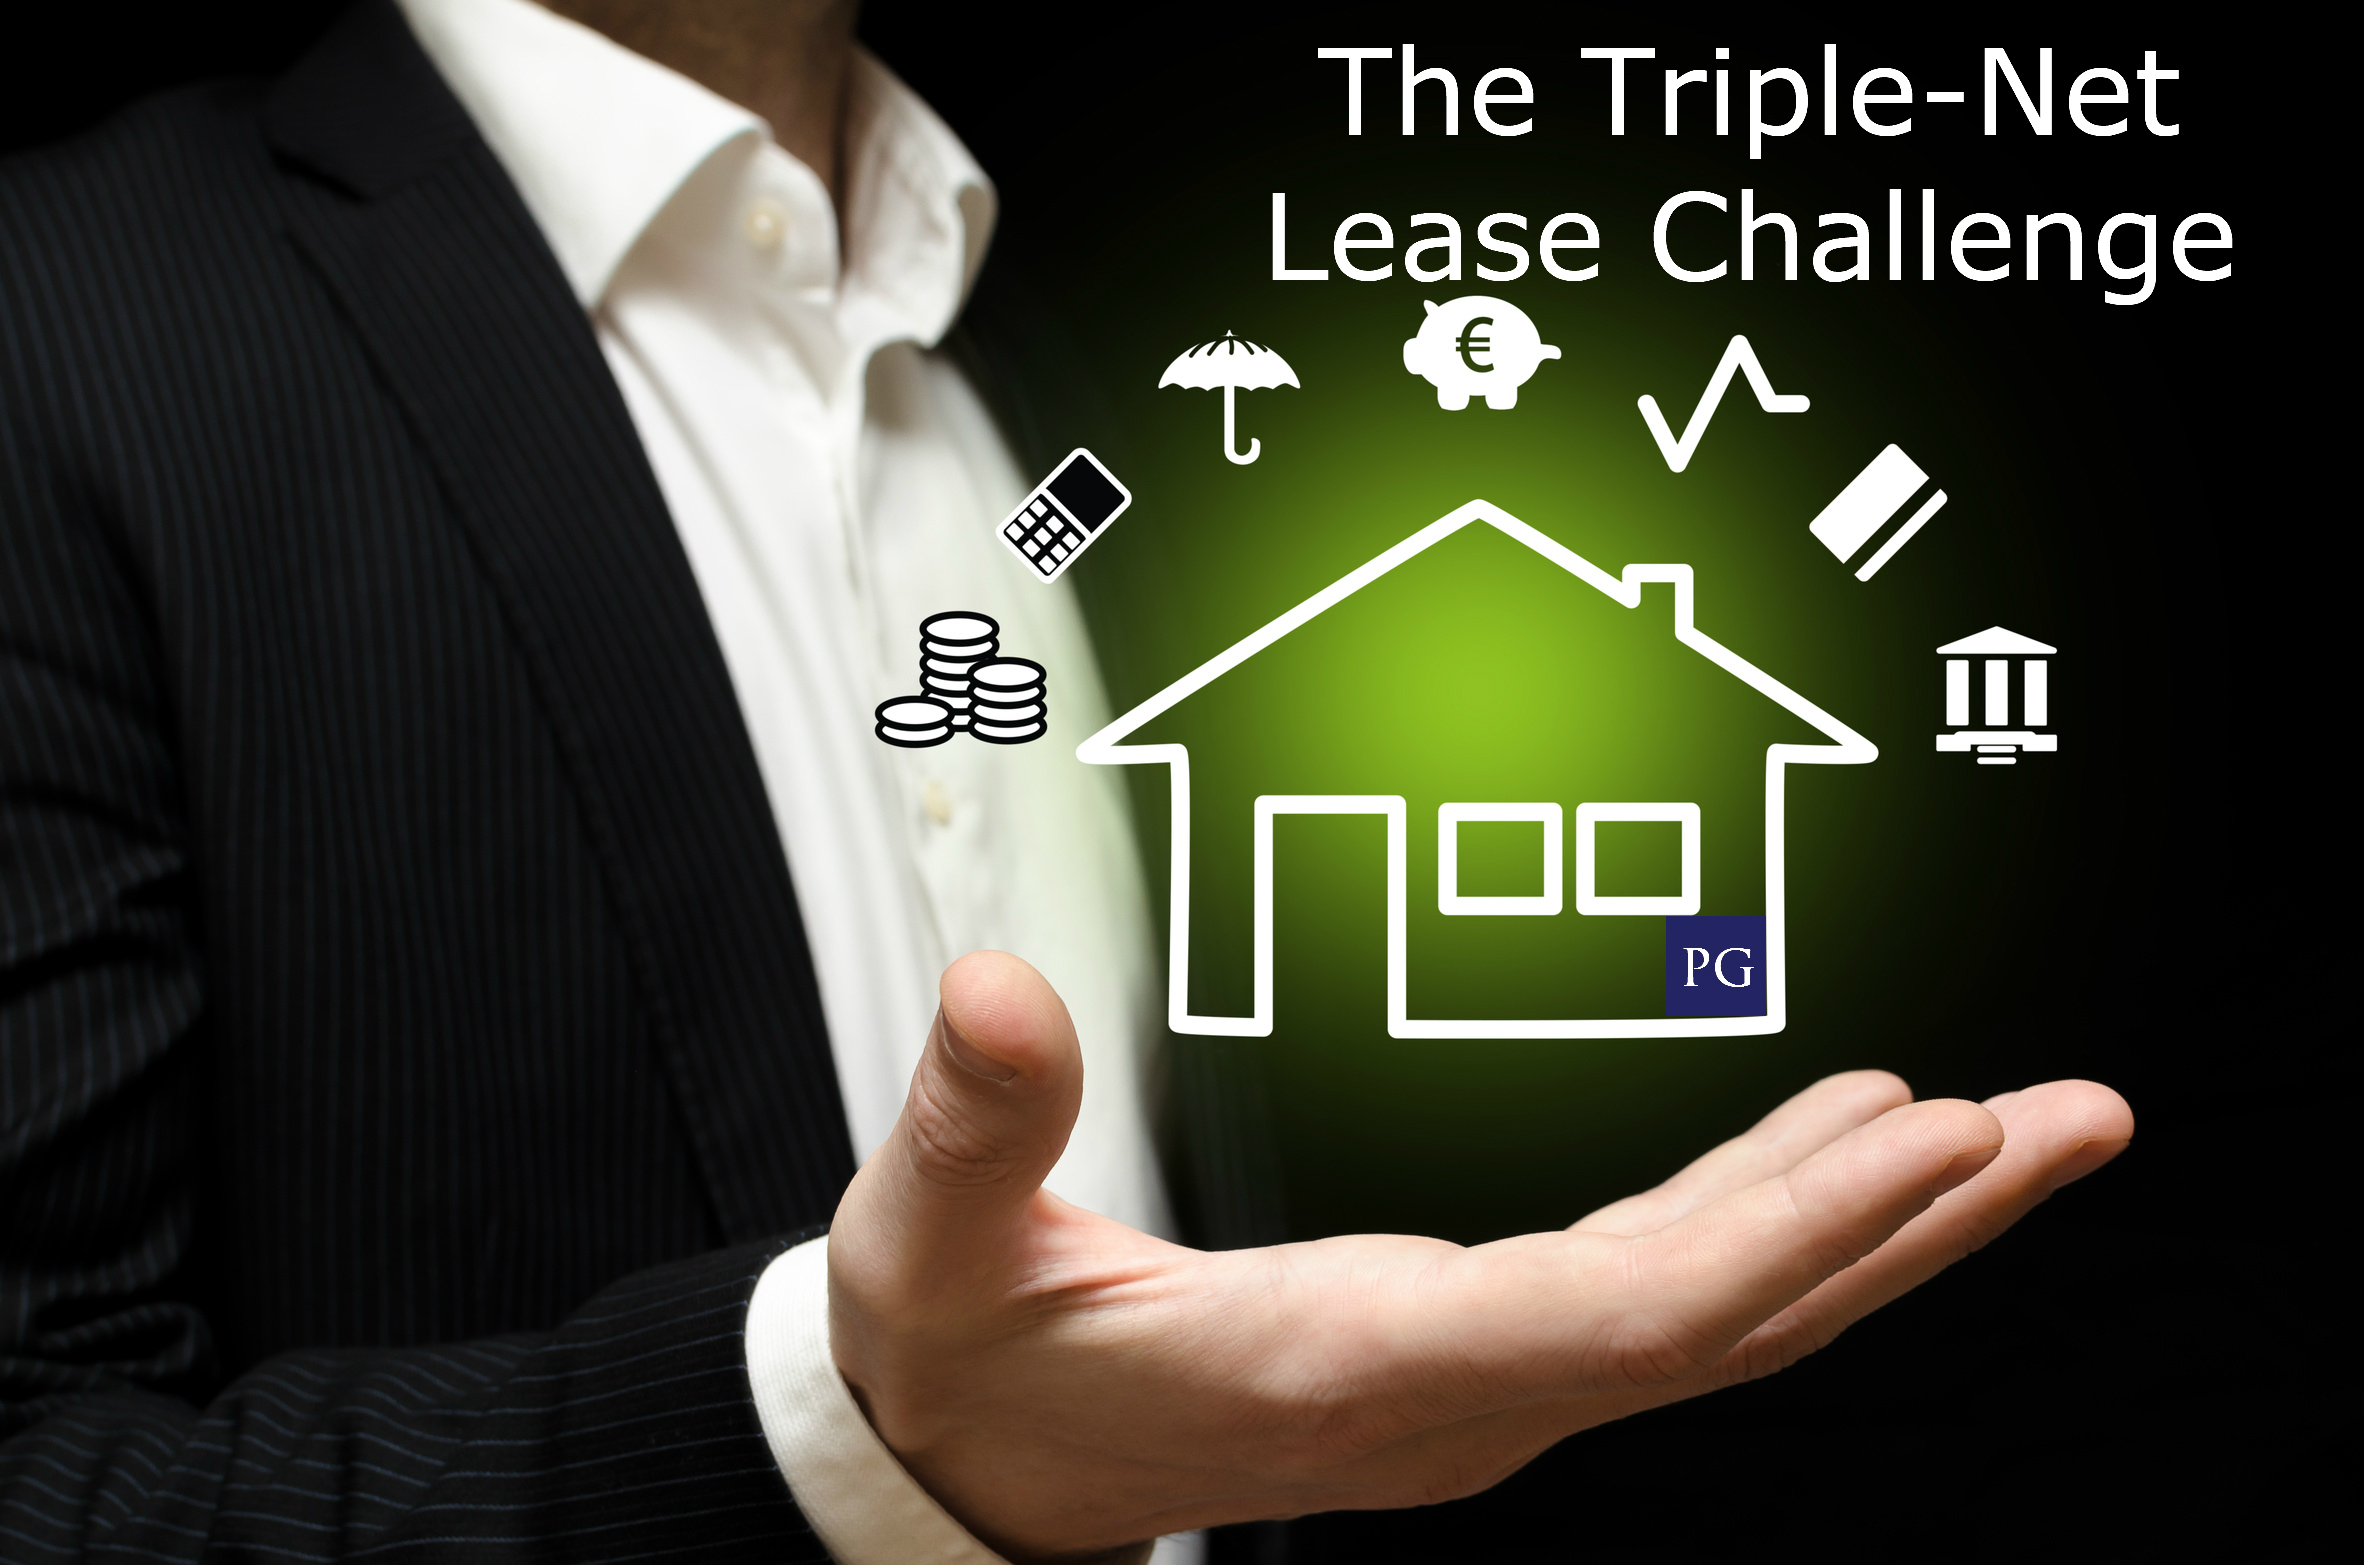 The Triple-Net Lease Challenge